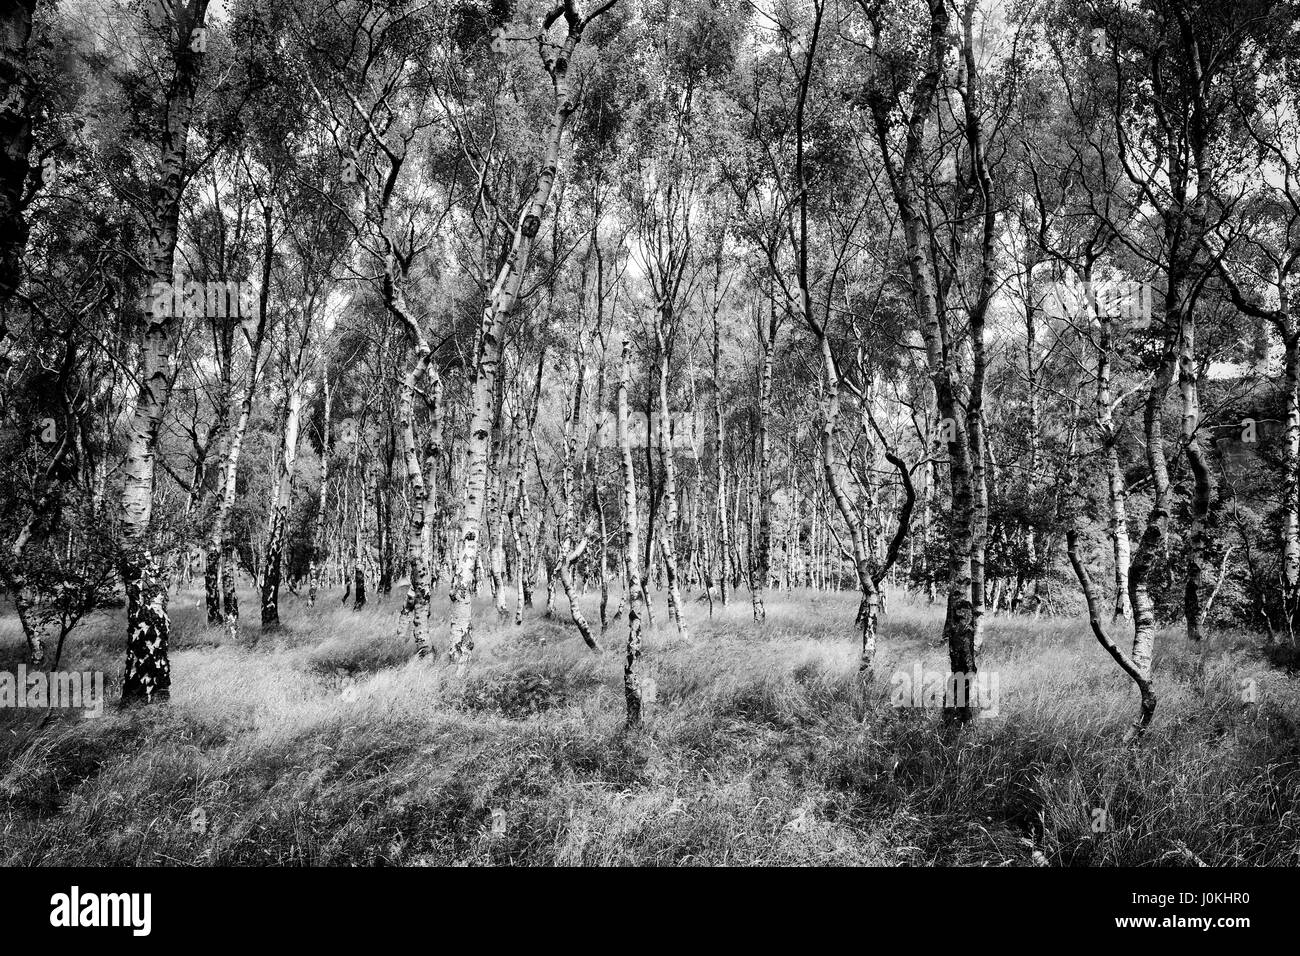 Silver birch forest at Bolehill Quarry, Peak District Stock Photo